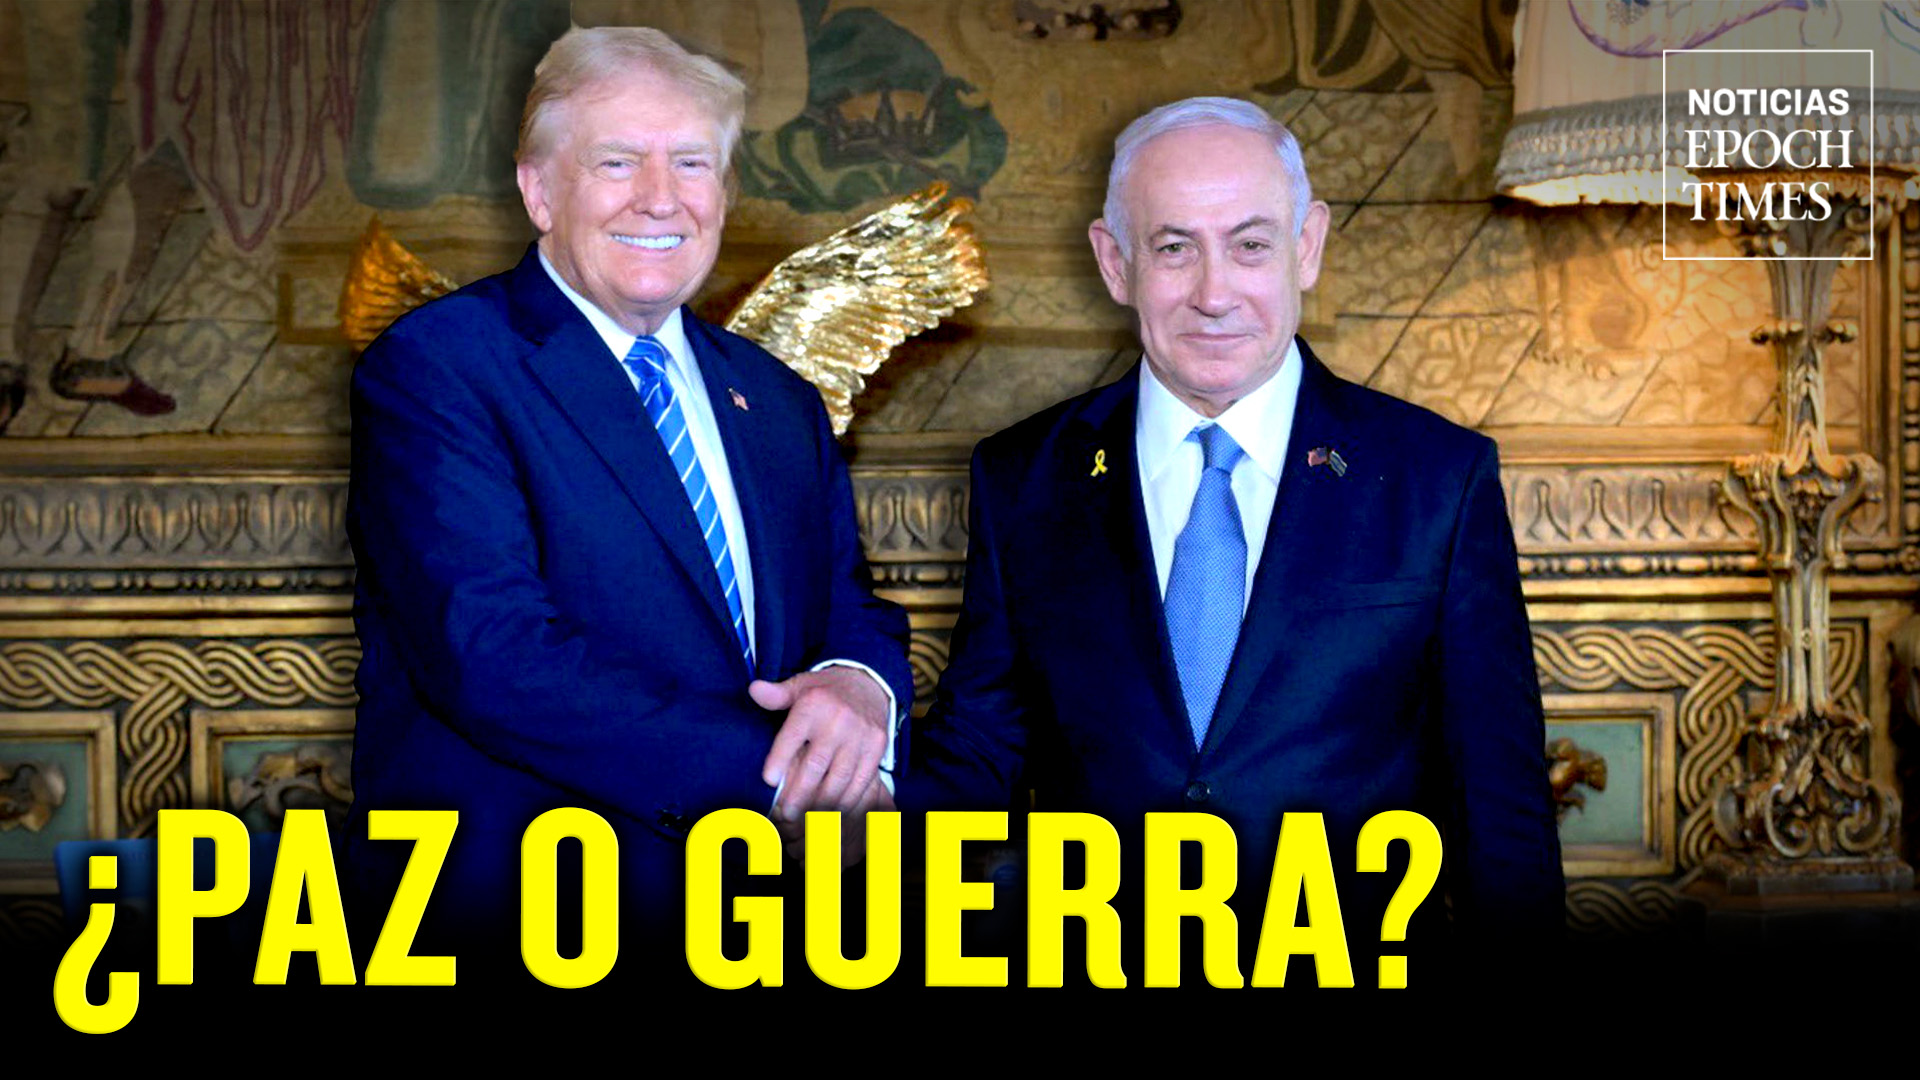 Trump y Netanyahu se reúnen en Mar-a-Lago; Los Obama respaldan a Kamala Harris para presidente | NET